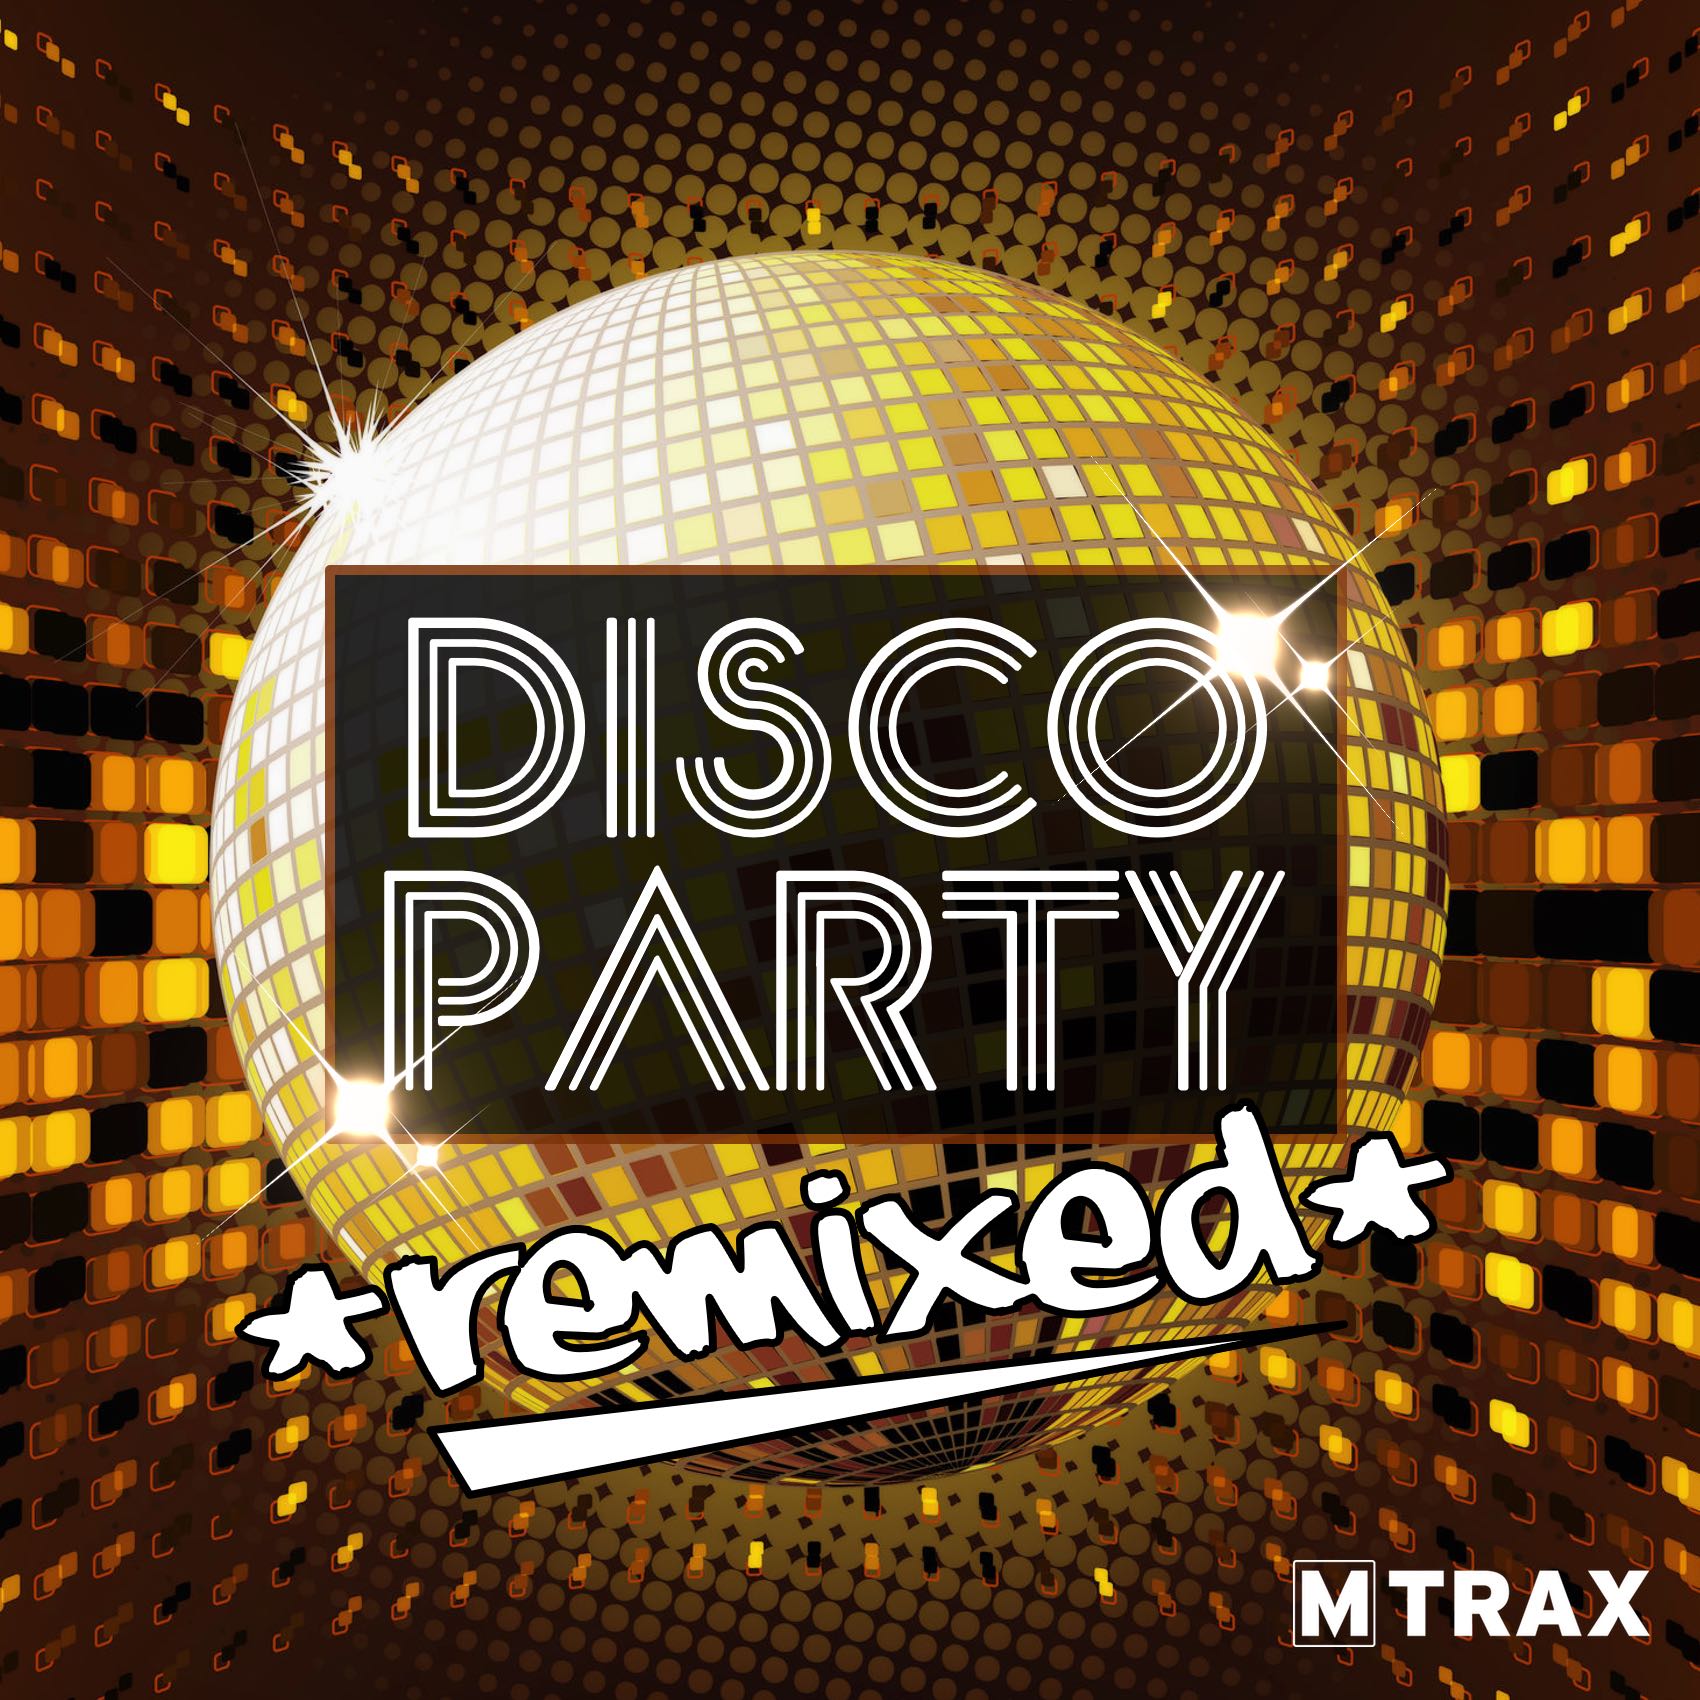 Disco disco party party remix. Диско пати. Надпись диско пати. Диско вечеринка. Disco надпись.